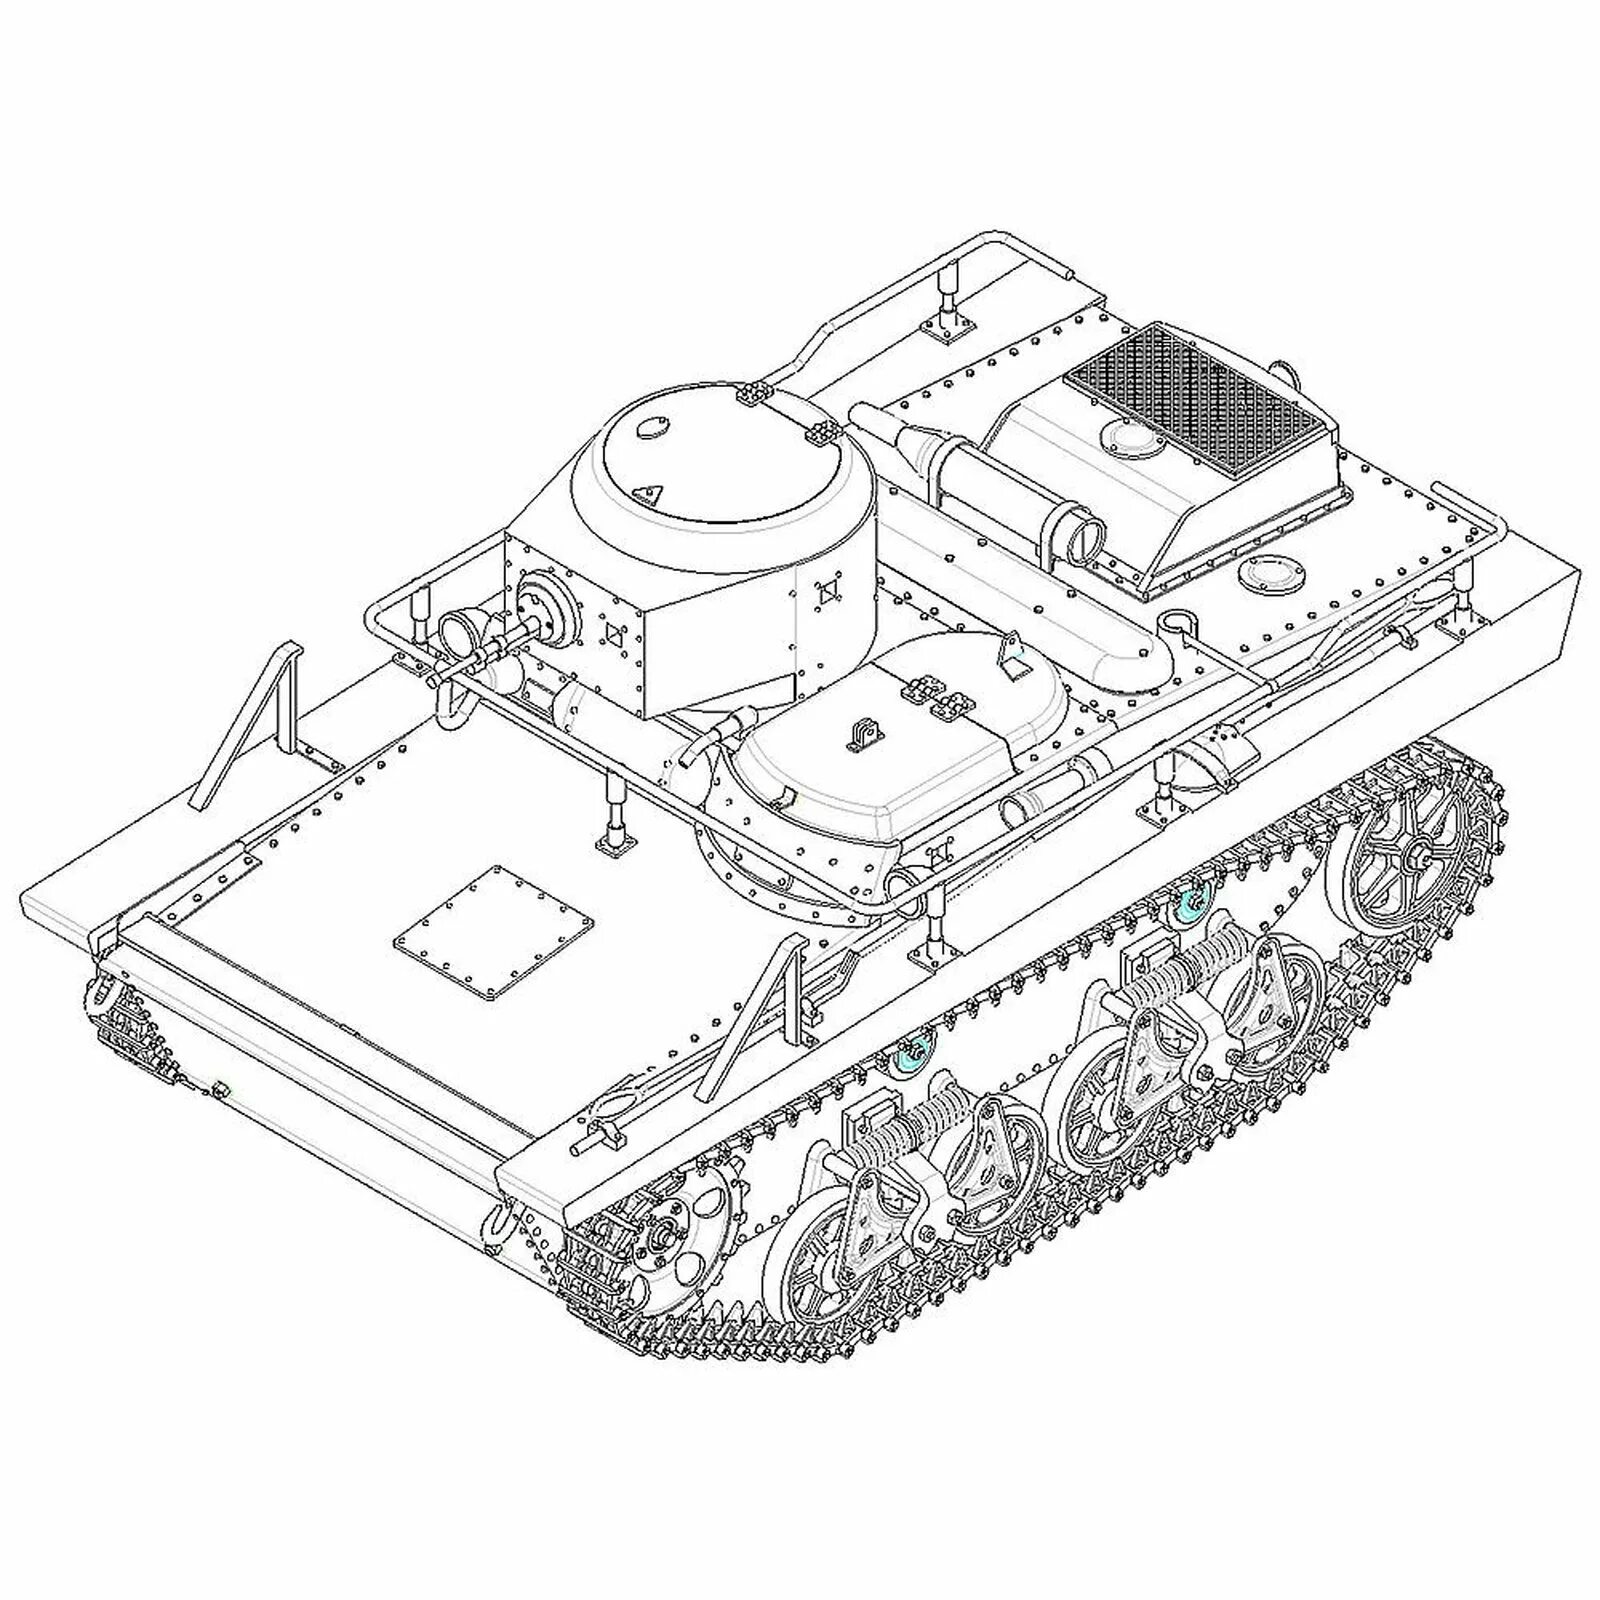 T 37 8. 83820 Hobby Boss. 83820 Техника и вооружение Soviet t-37tu Command Tank (1:35).